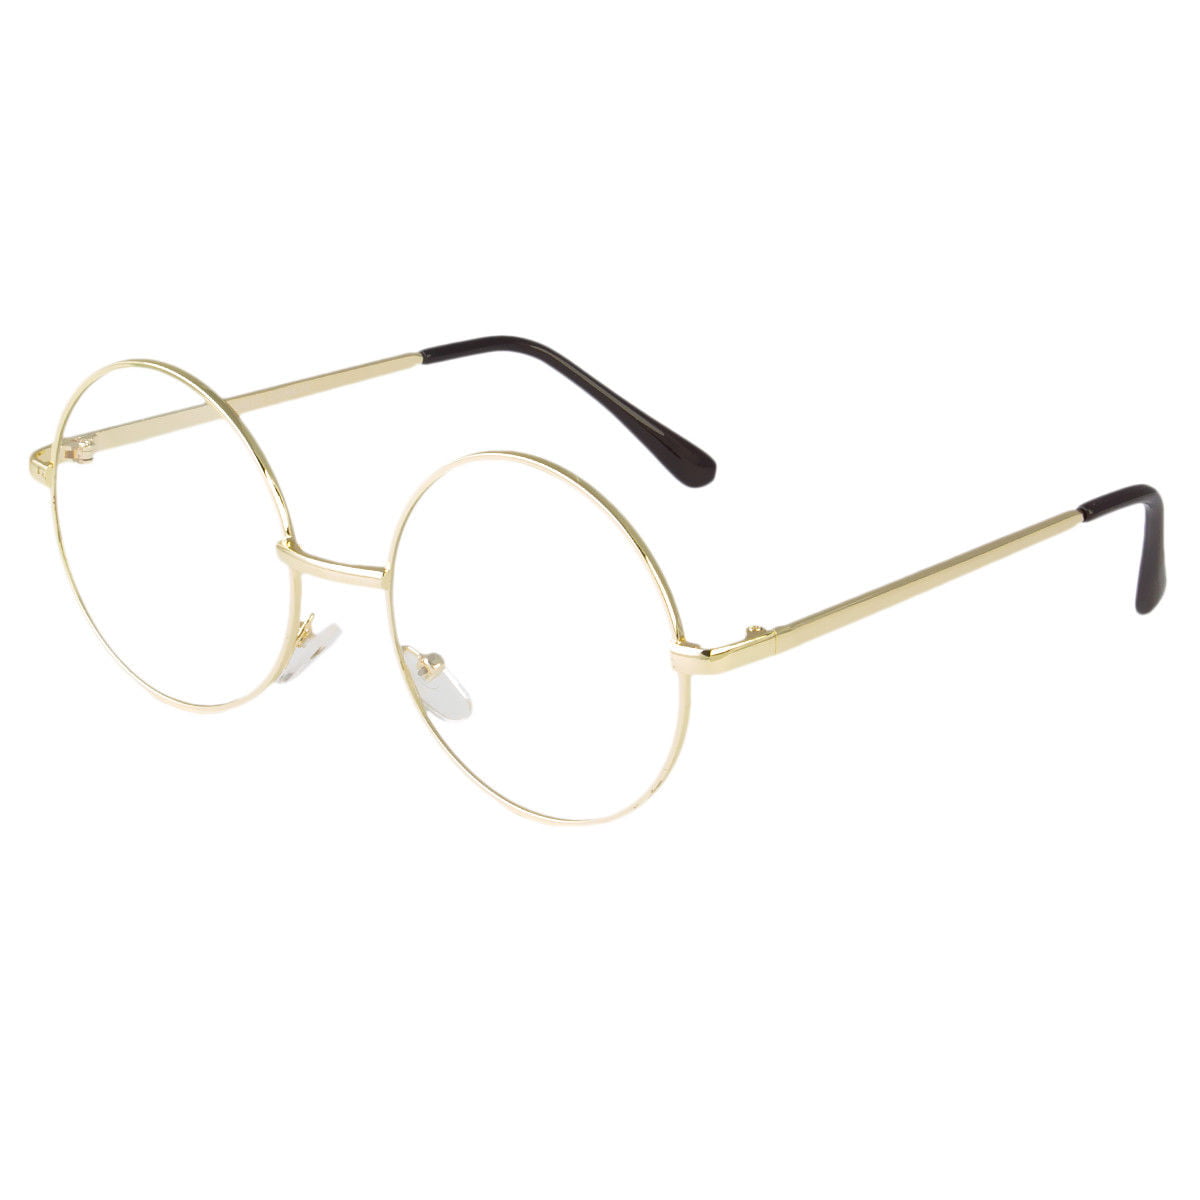 LARGE OVERSIZE BIG ROUND Eye Glasses Gold Color Circle Metal Frame Clear Lens 